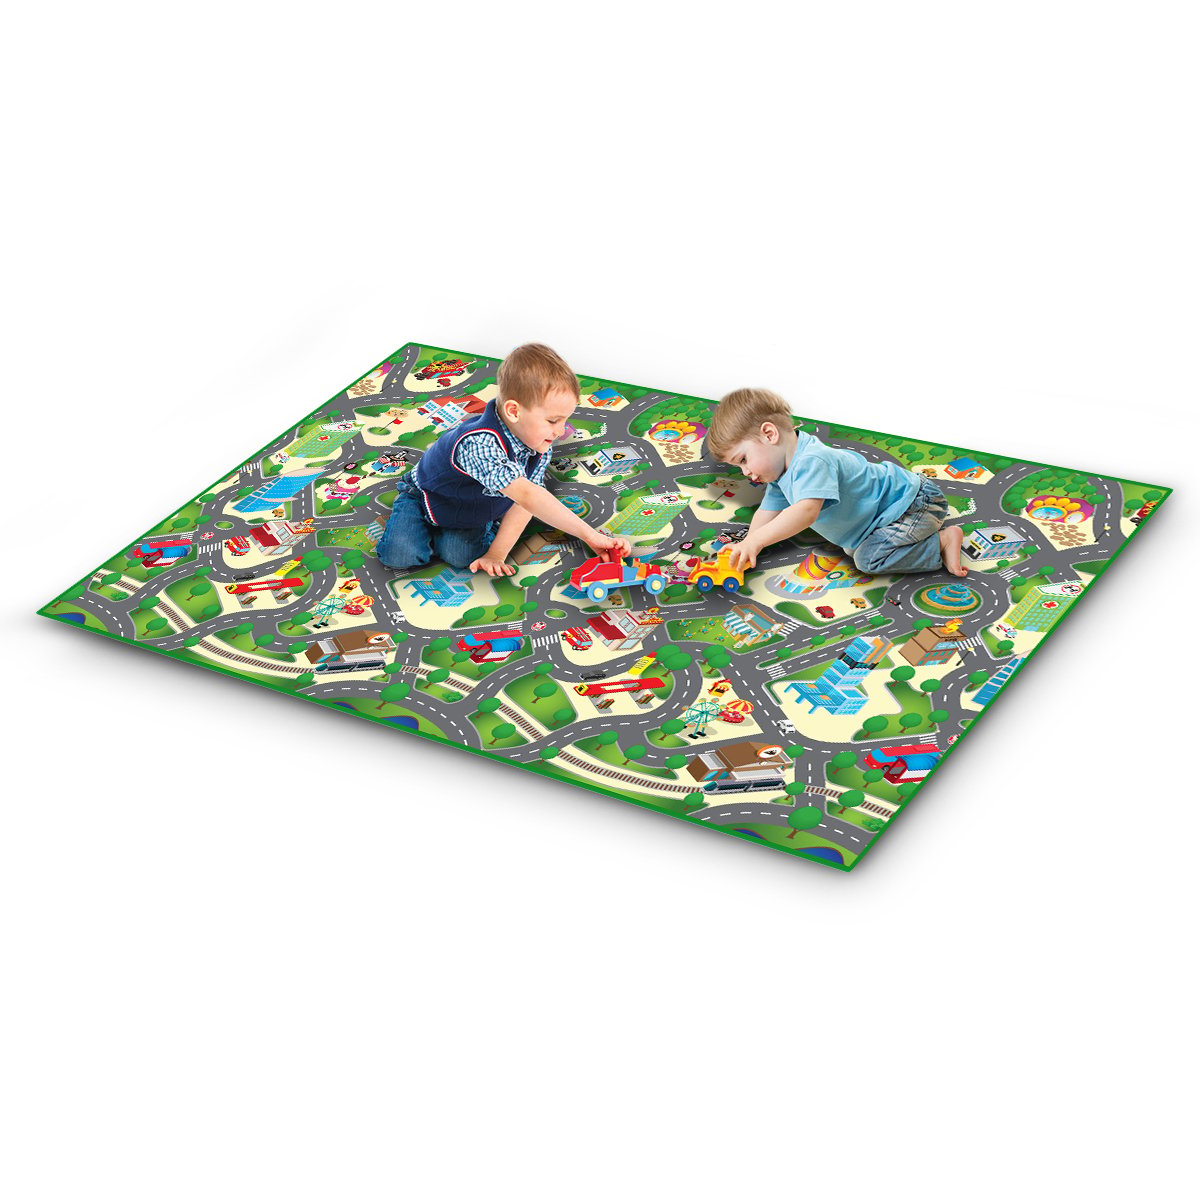 Rollmatz City Design Baby Kids Play Floor Mat 200cm x 120cm 2